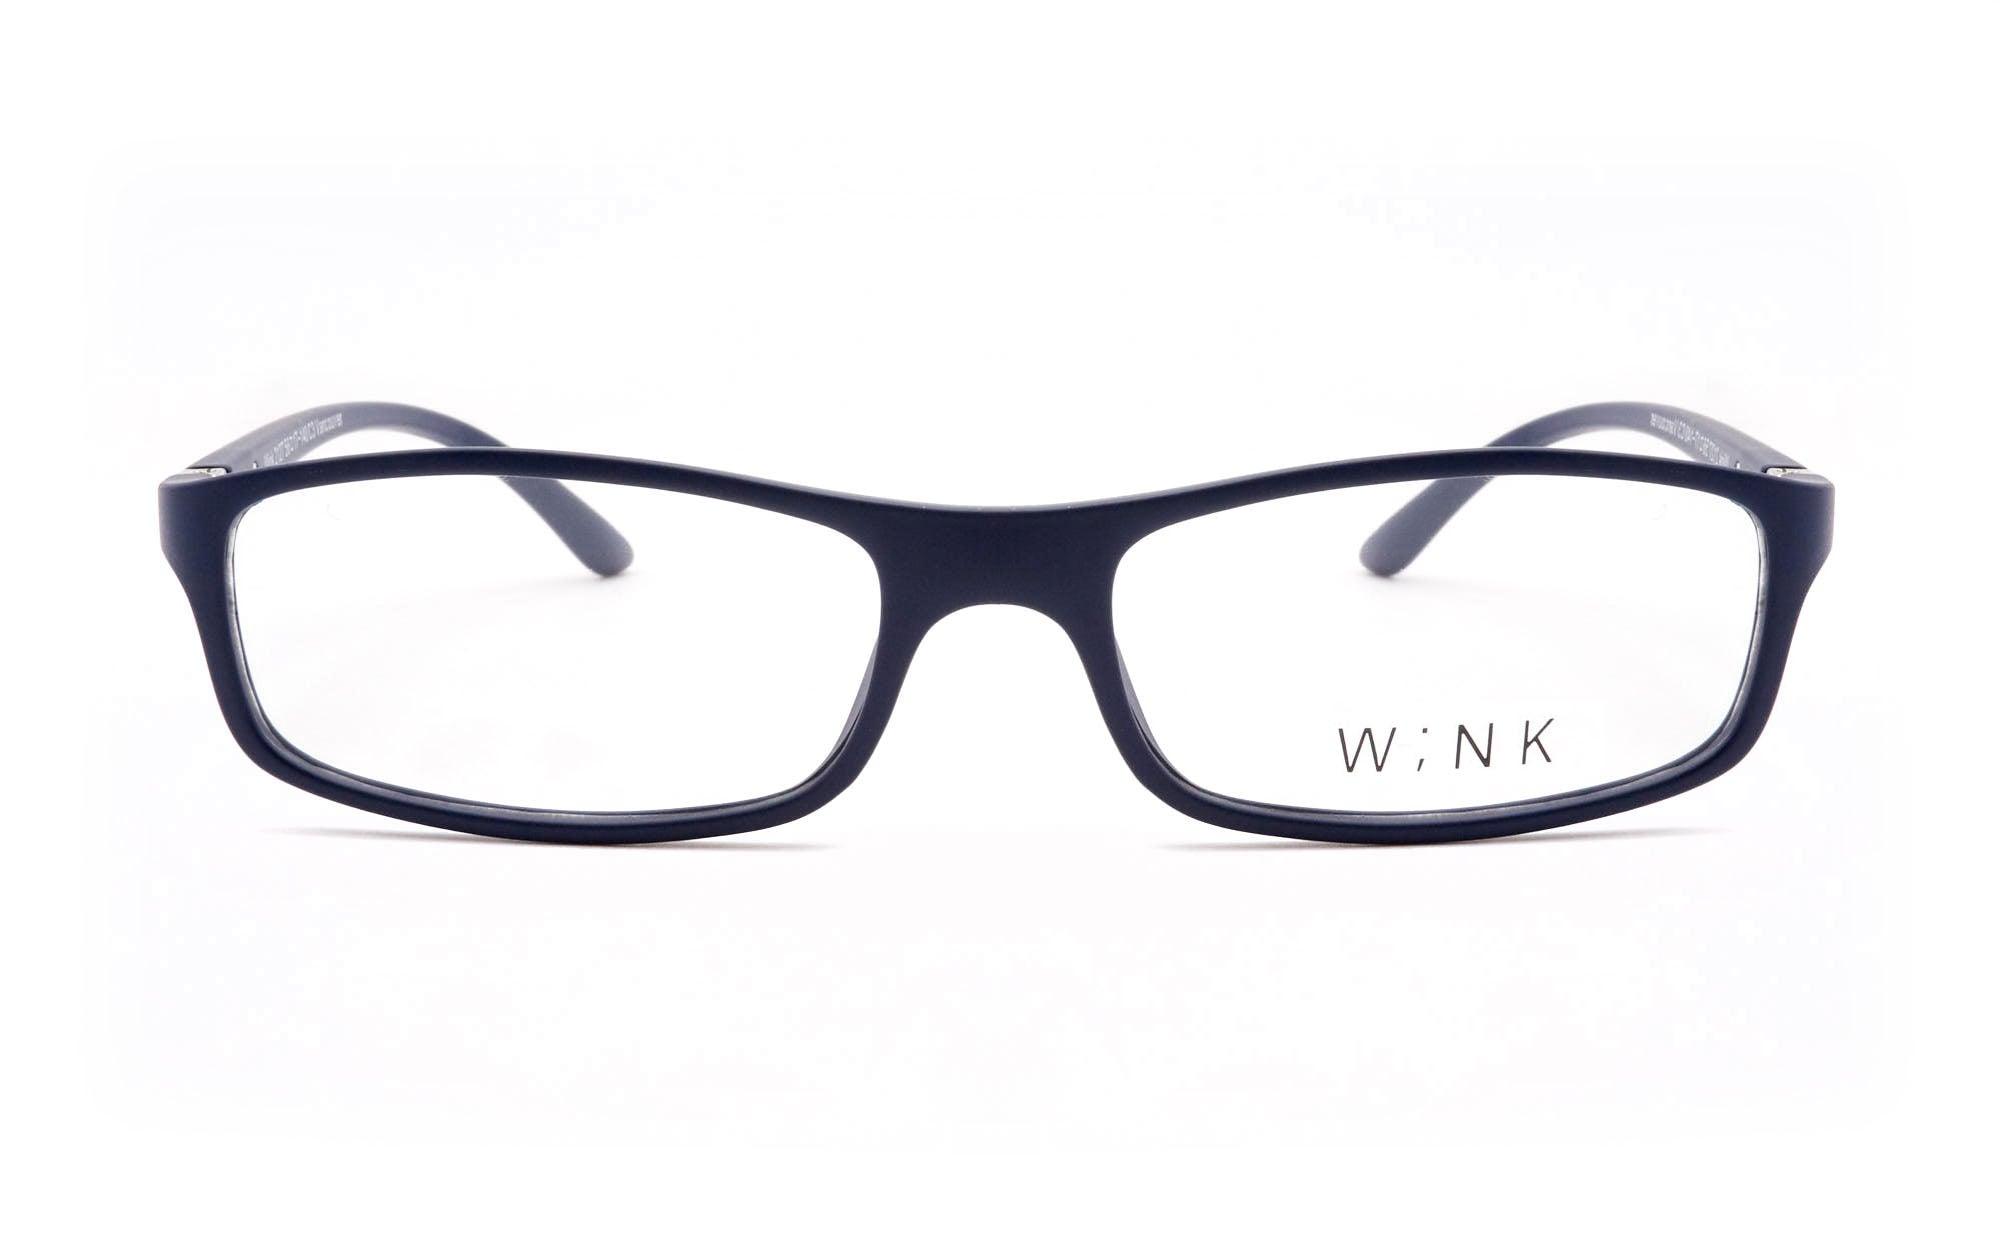 wink vancouver 03 - Opticas Lookout